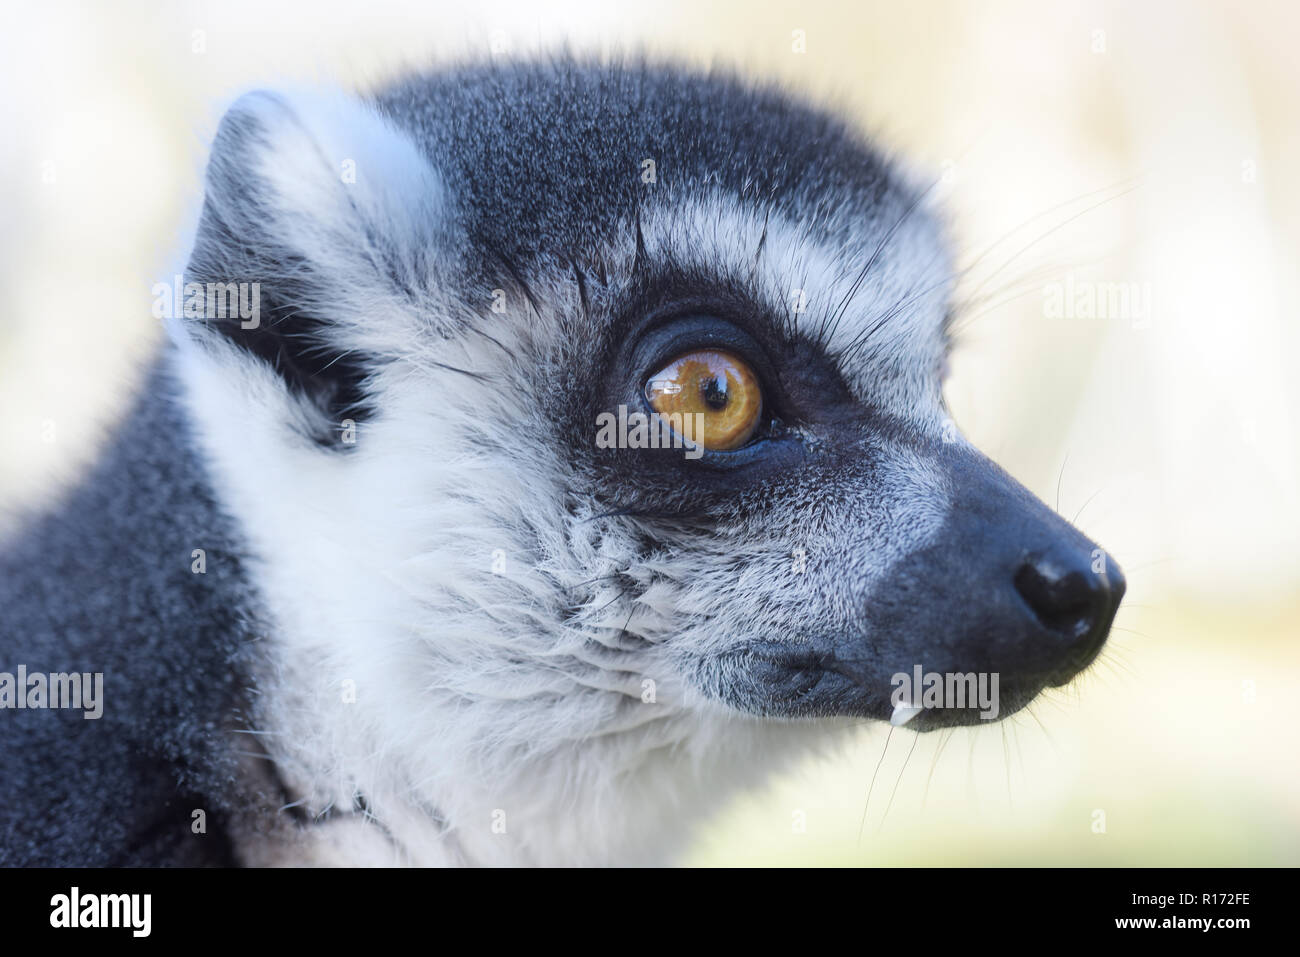 Close Up retrato de un Lémur de cola de anillo (Lemur catta) buscando sideway Foto de stock